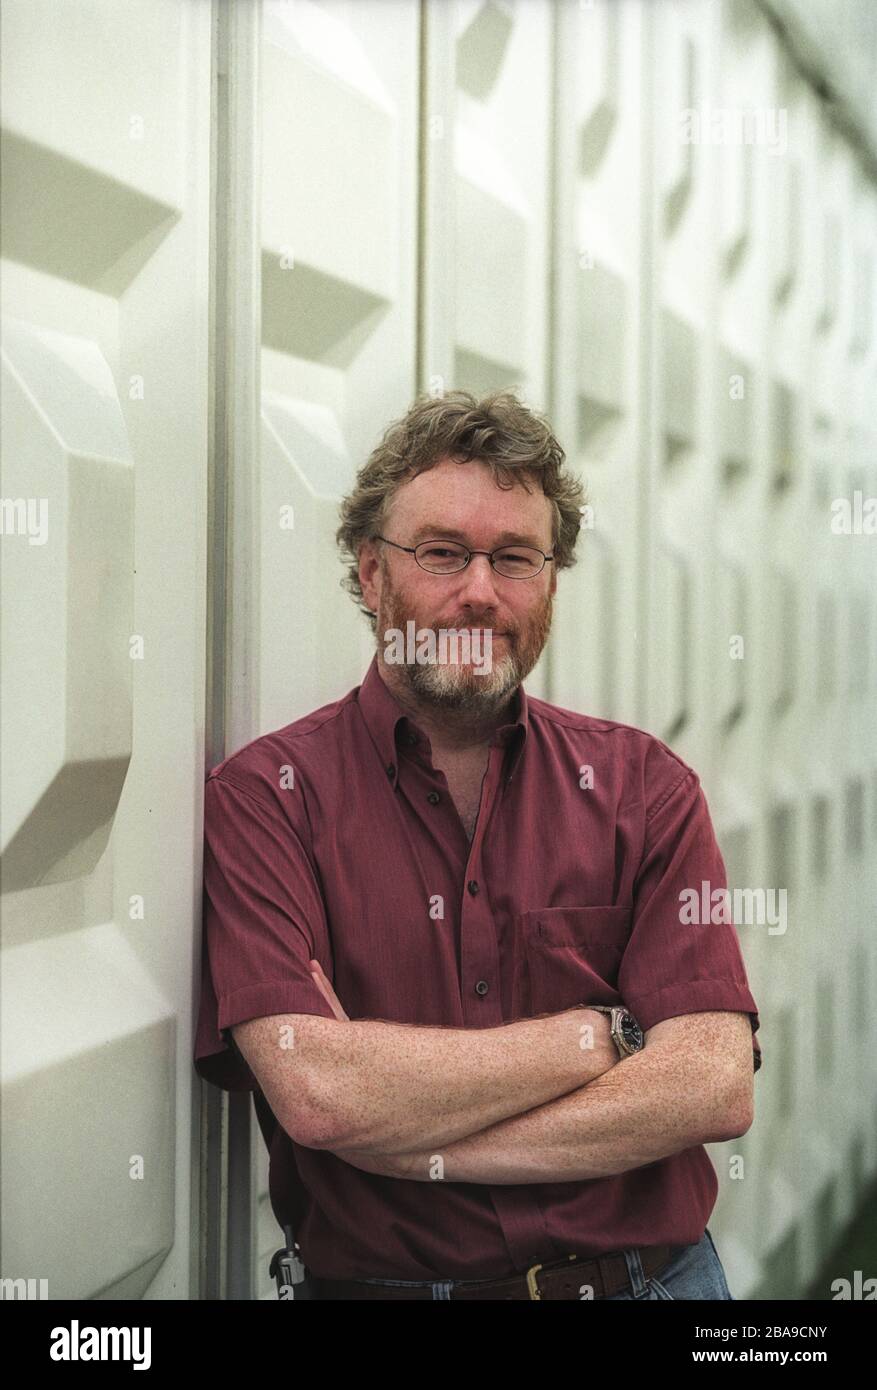 Iain banks scottish author writer hi-res stock photography and images -  Alamy